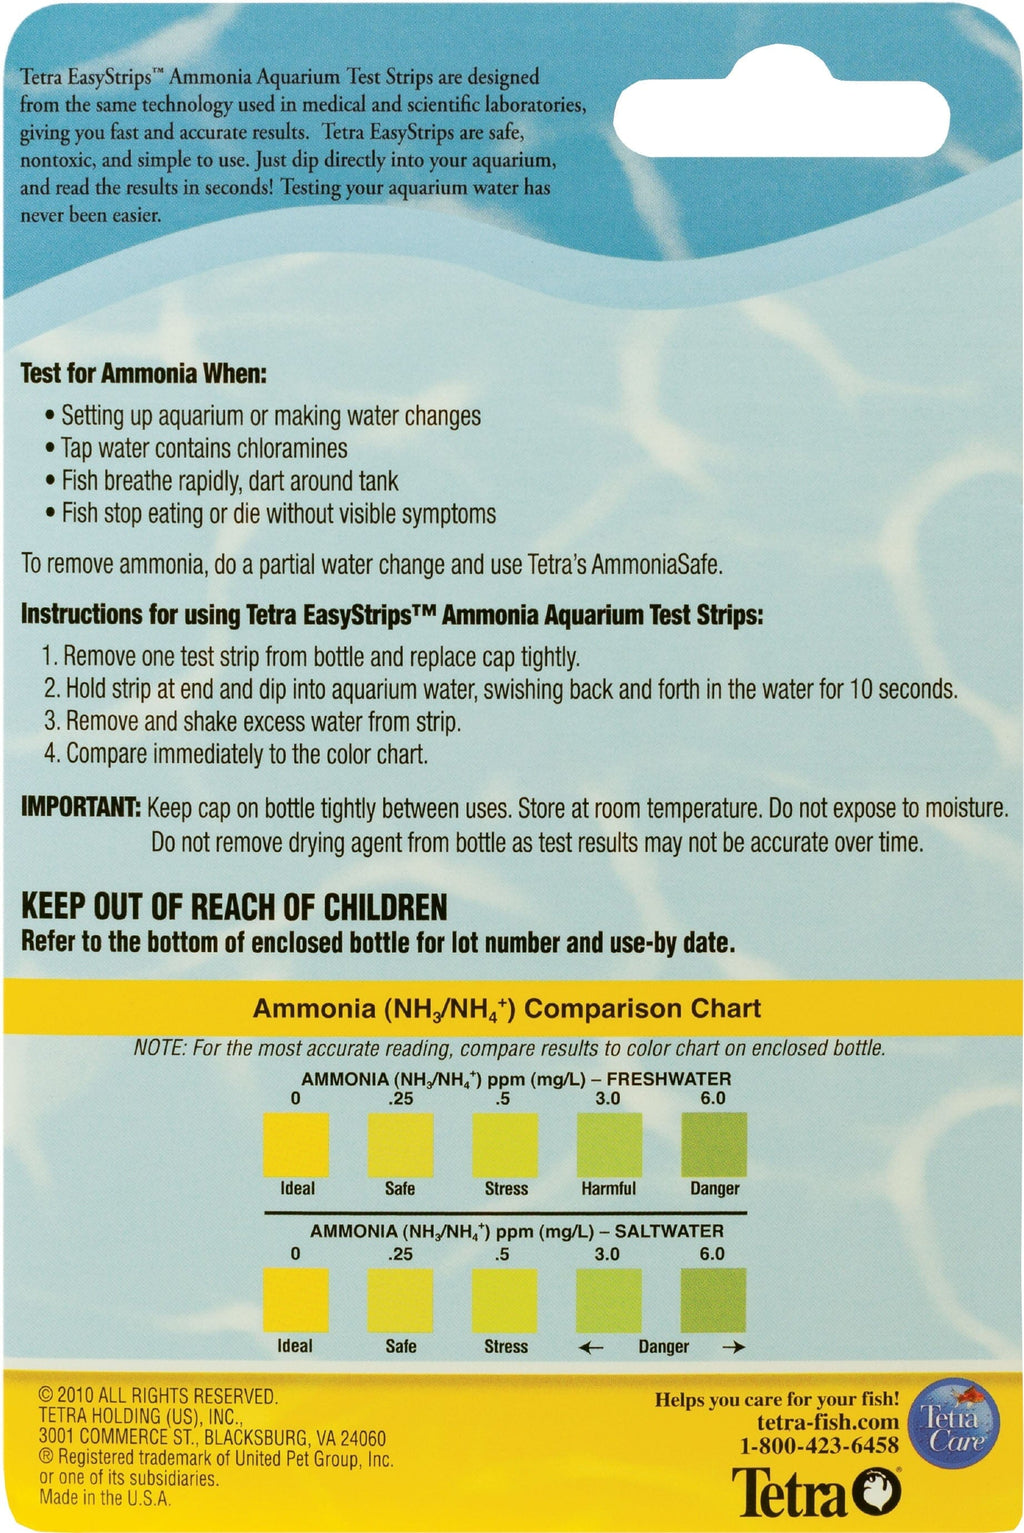 Tetra Easystrips Ammonia Aquarium Test Strips Aquarium Water Test Kit - 25 Pack  